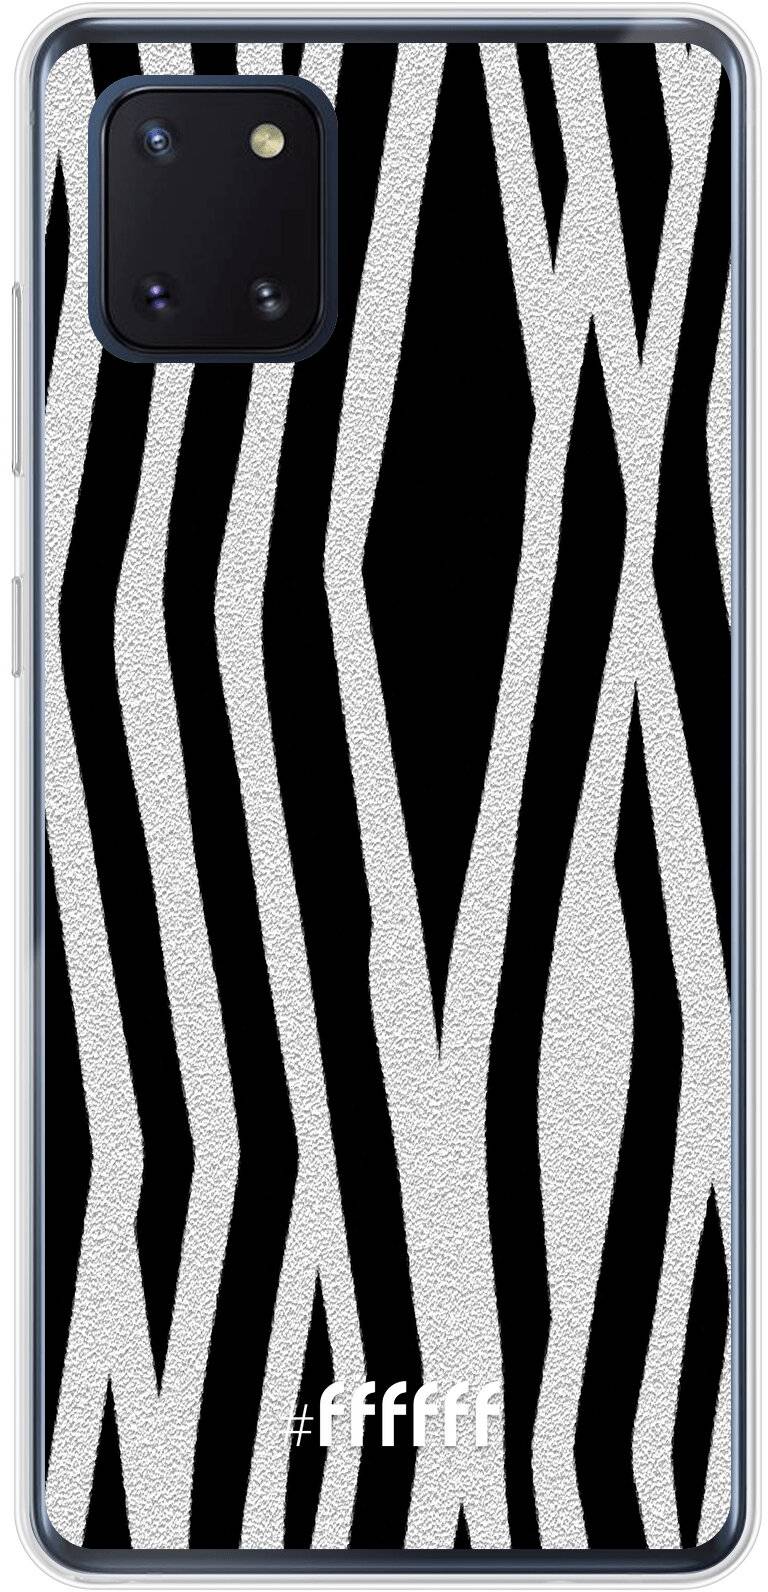 Zebra Print Galaxy Note 10 Lite